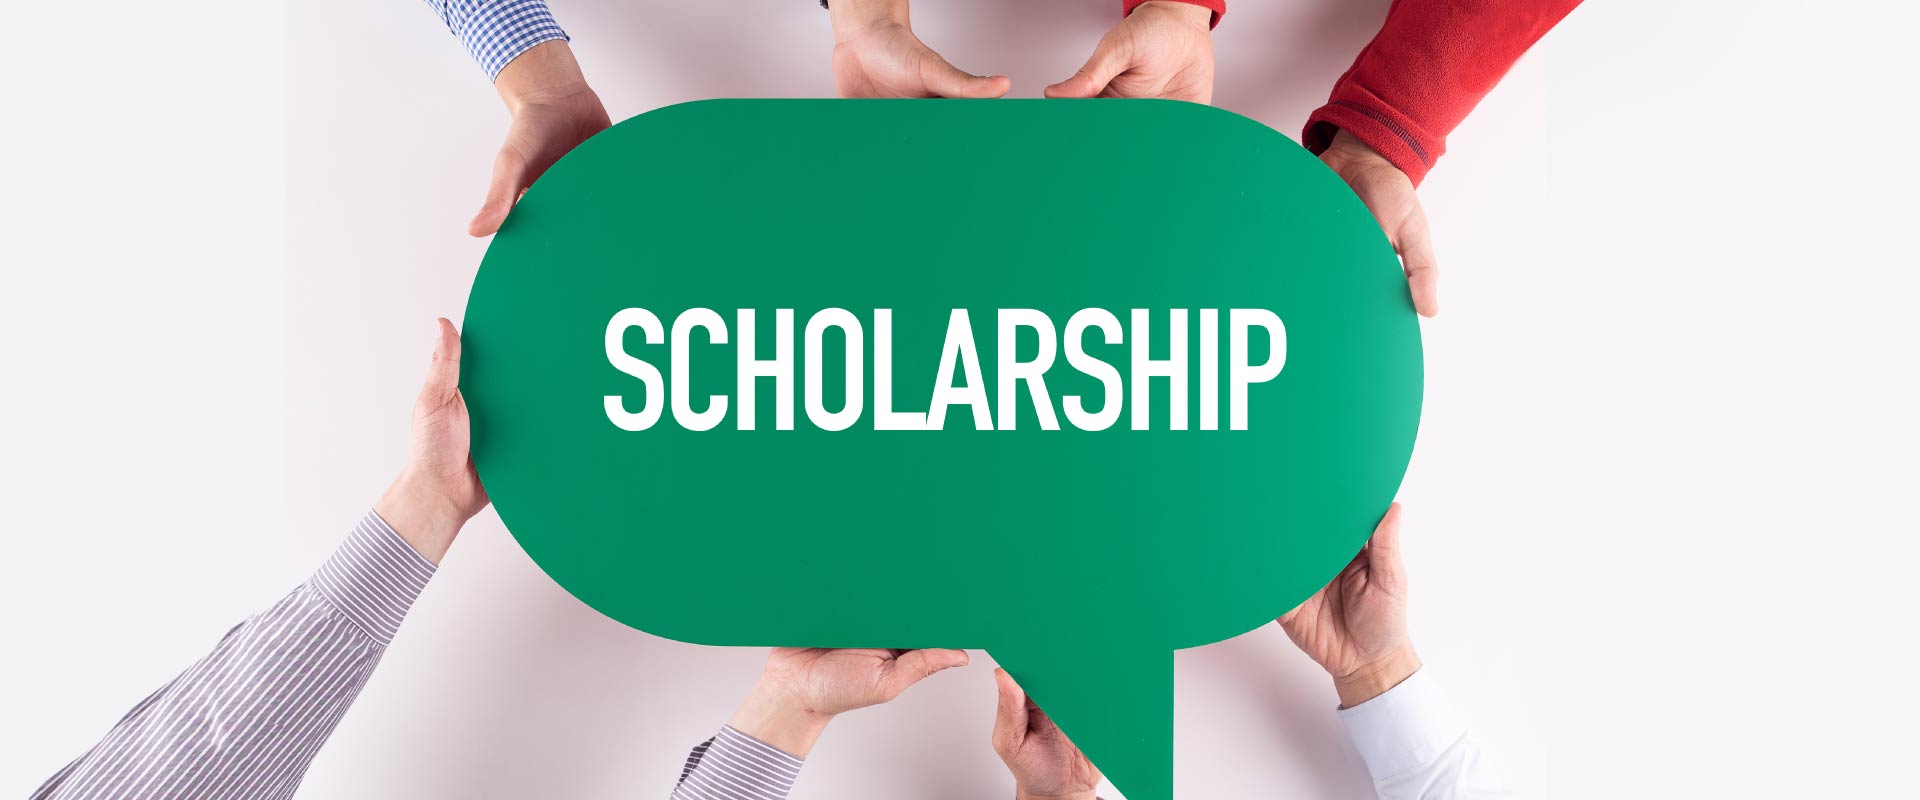 <b>SEN Pharma's scholarship - Fostering Knowledge</b>